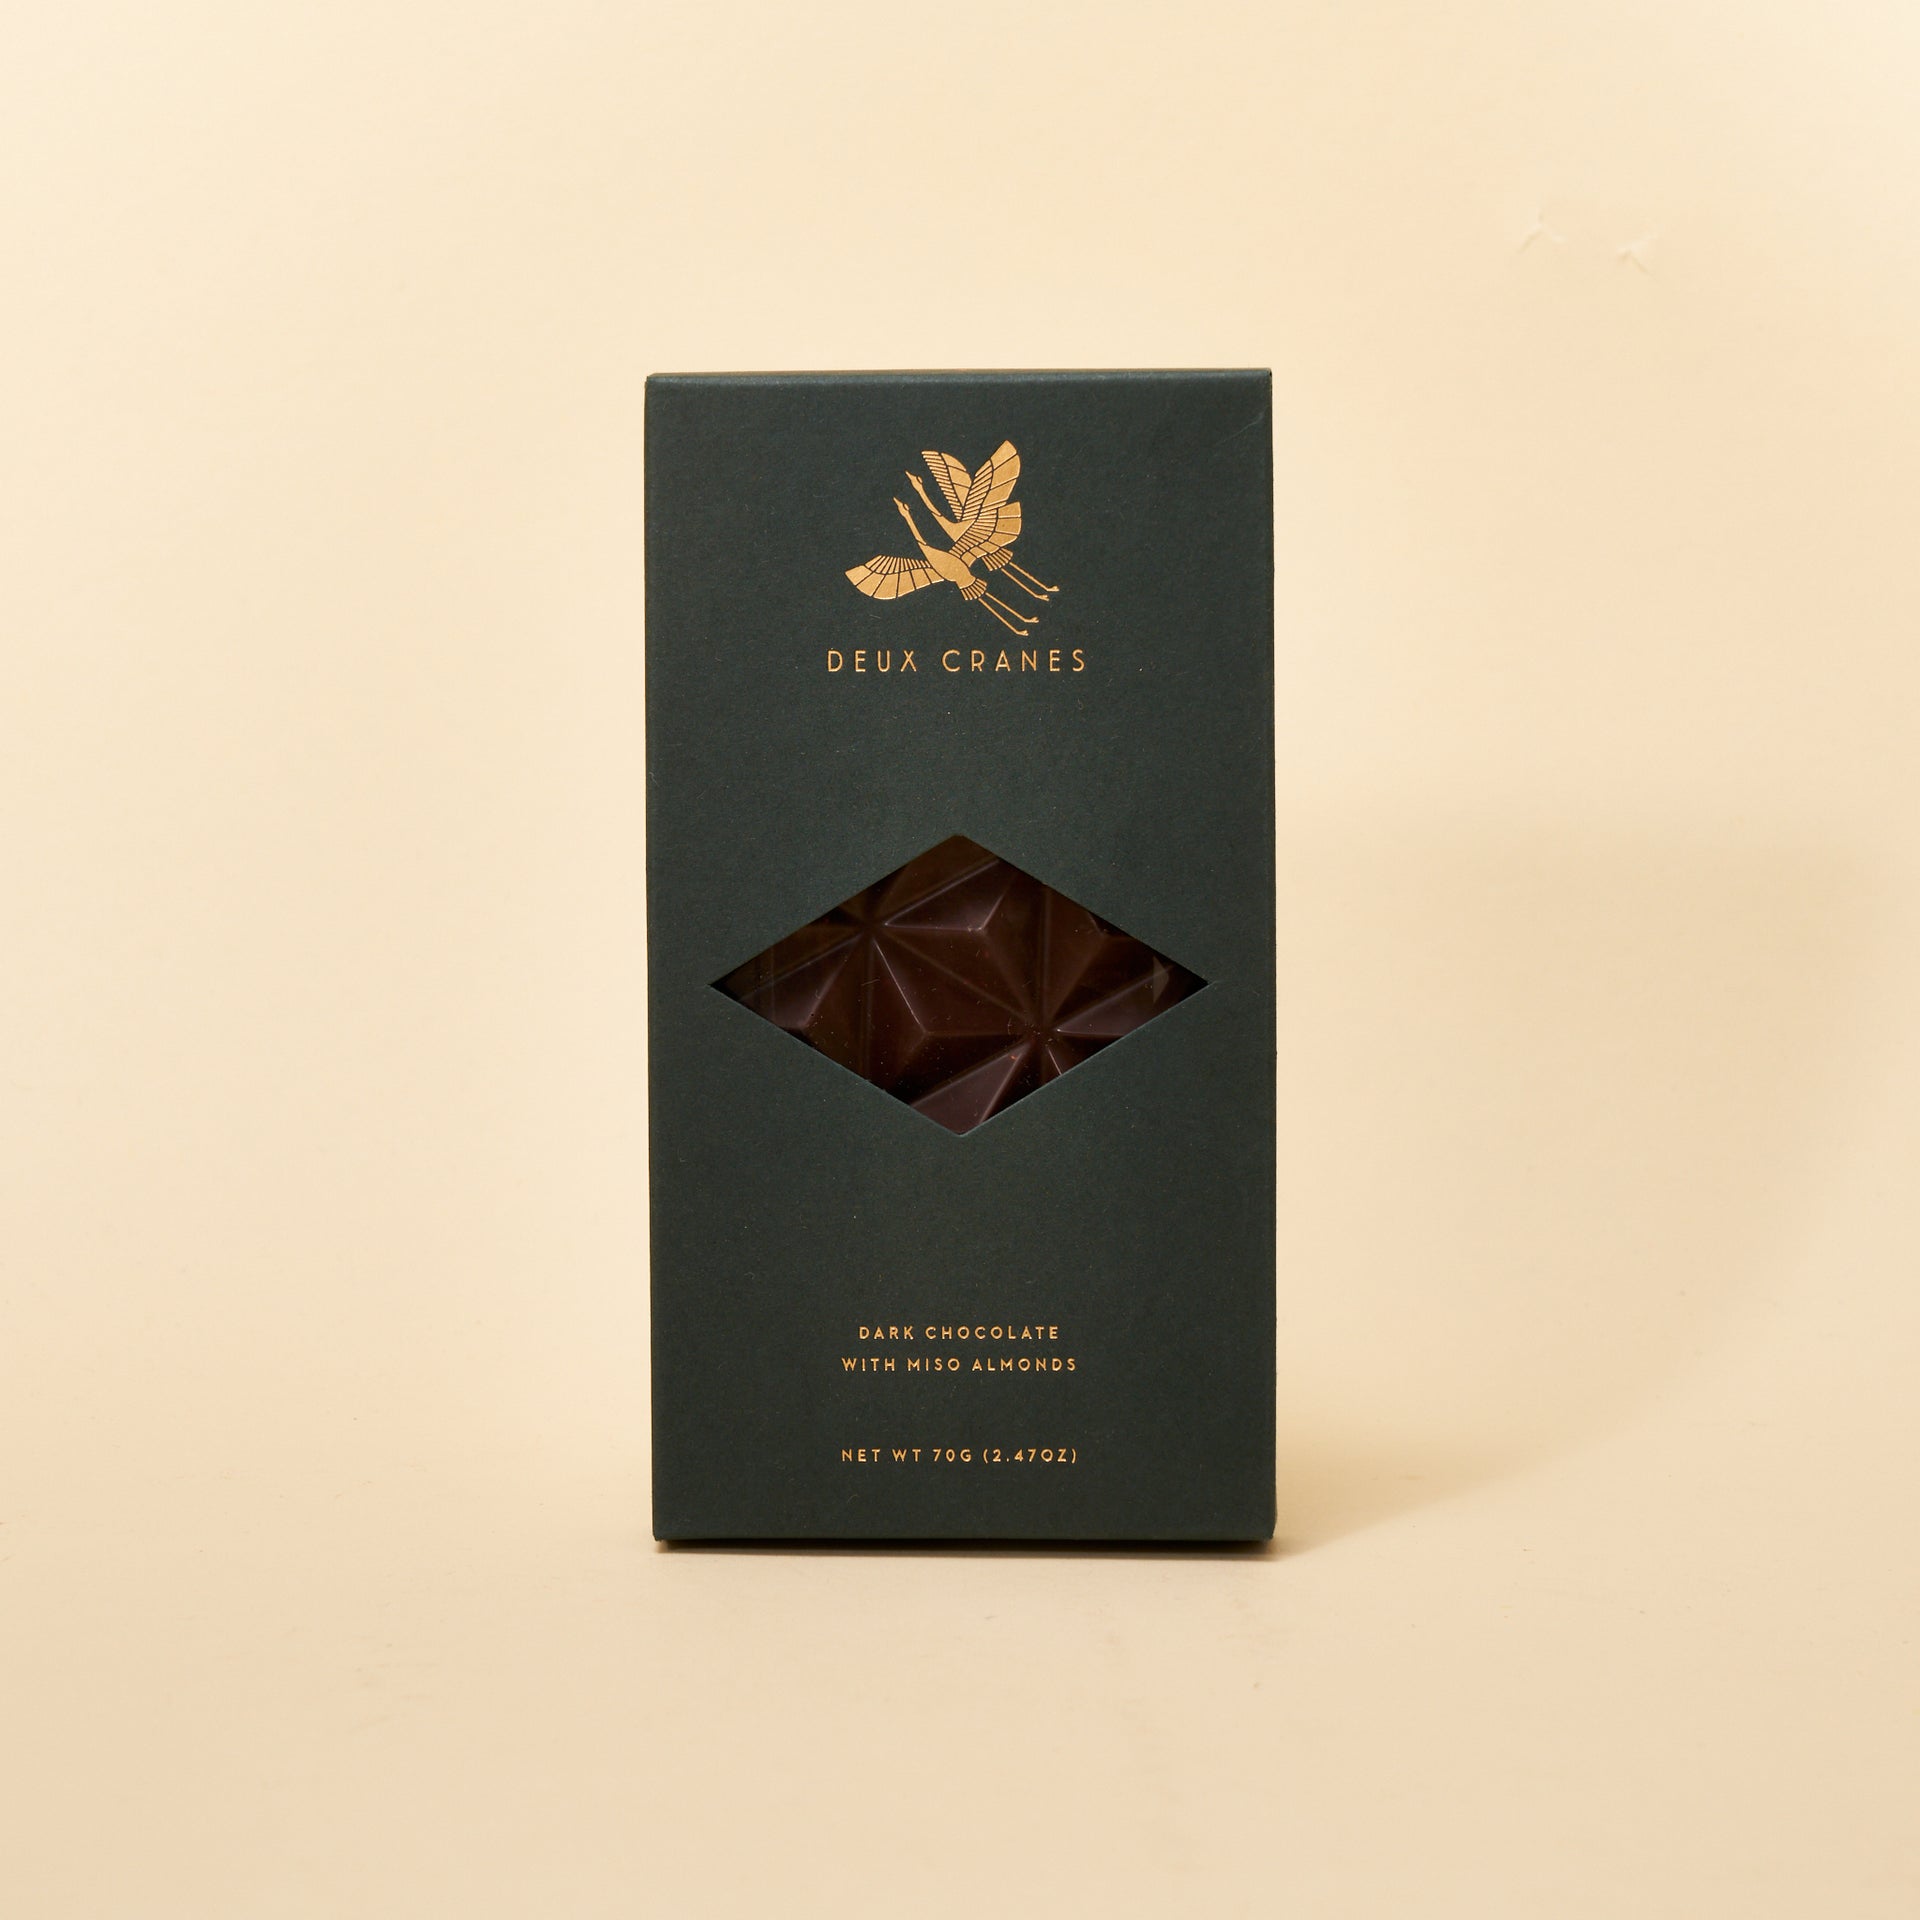 Dark Chocolate with Miso Almonds